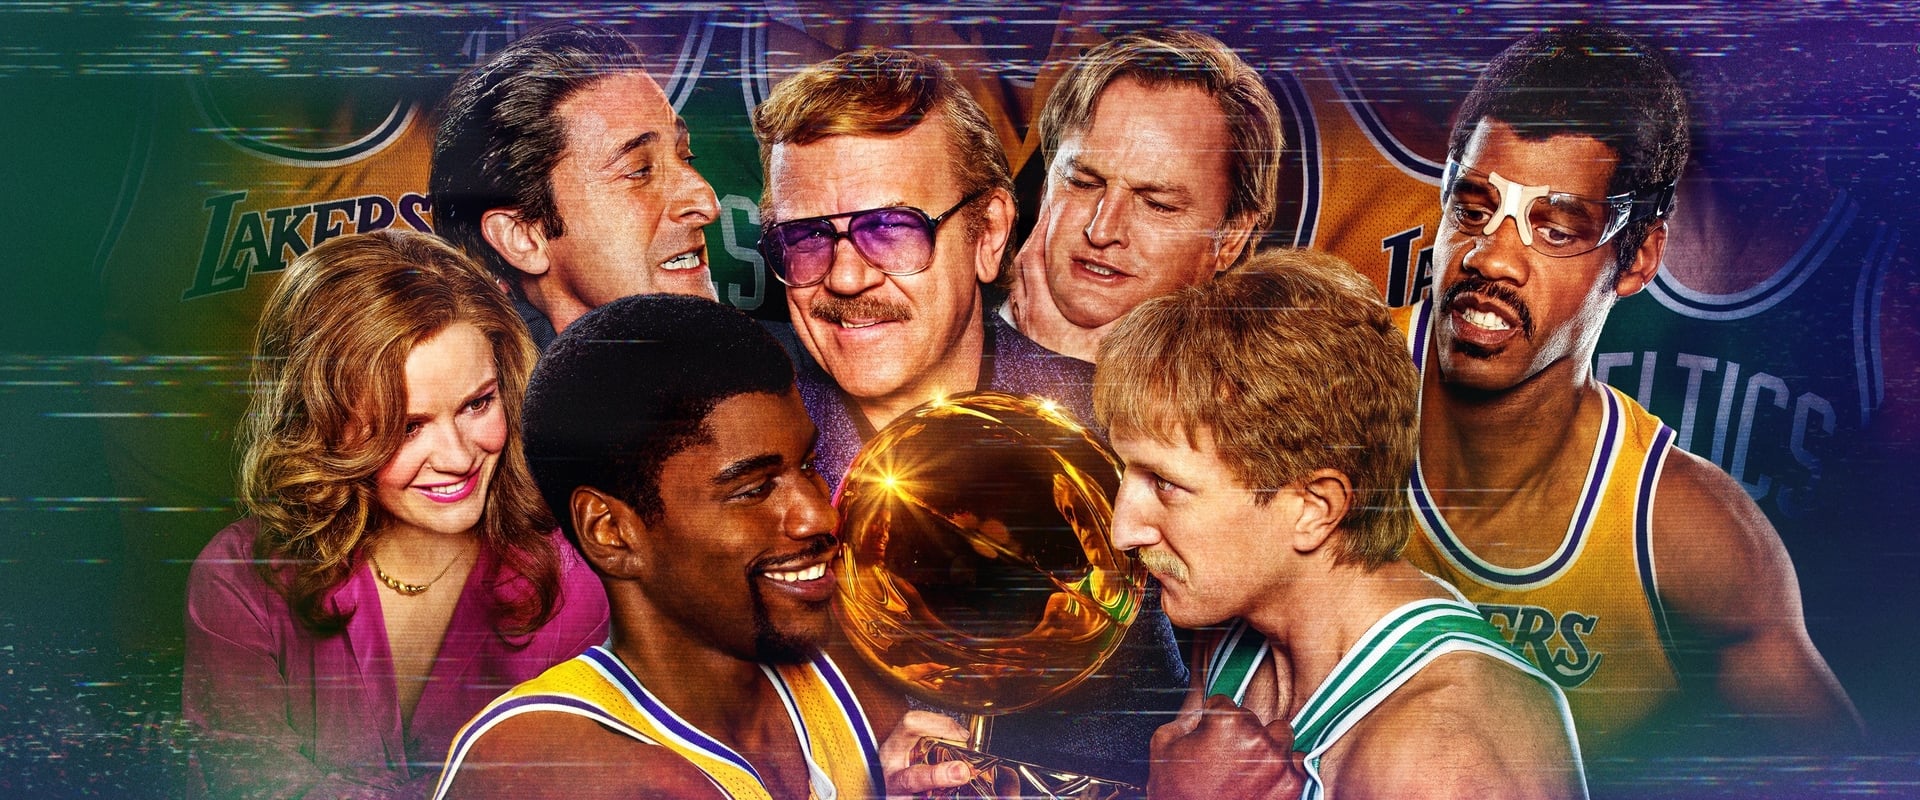 Winning Time: l’Ascesa Della Dinastia Dei Lakers [HD]